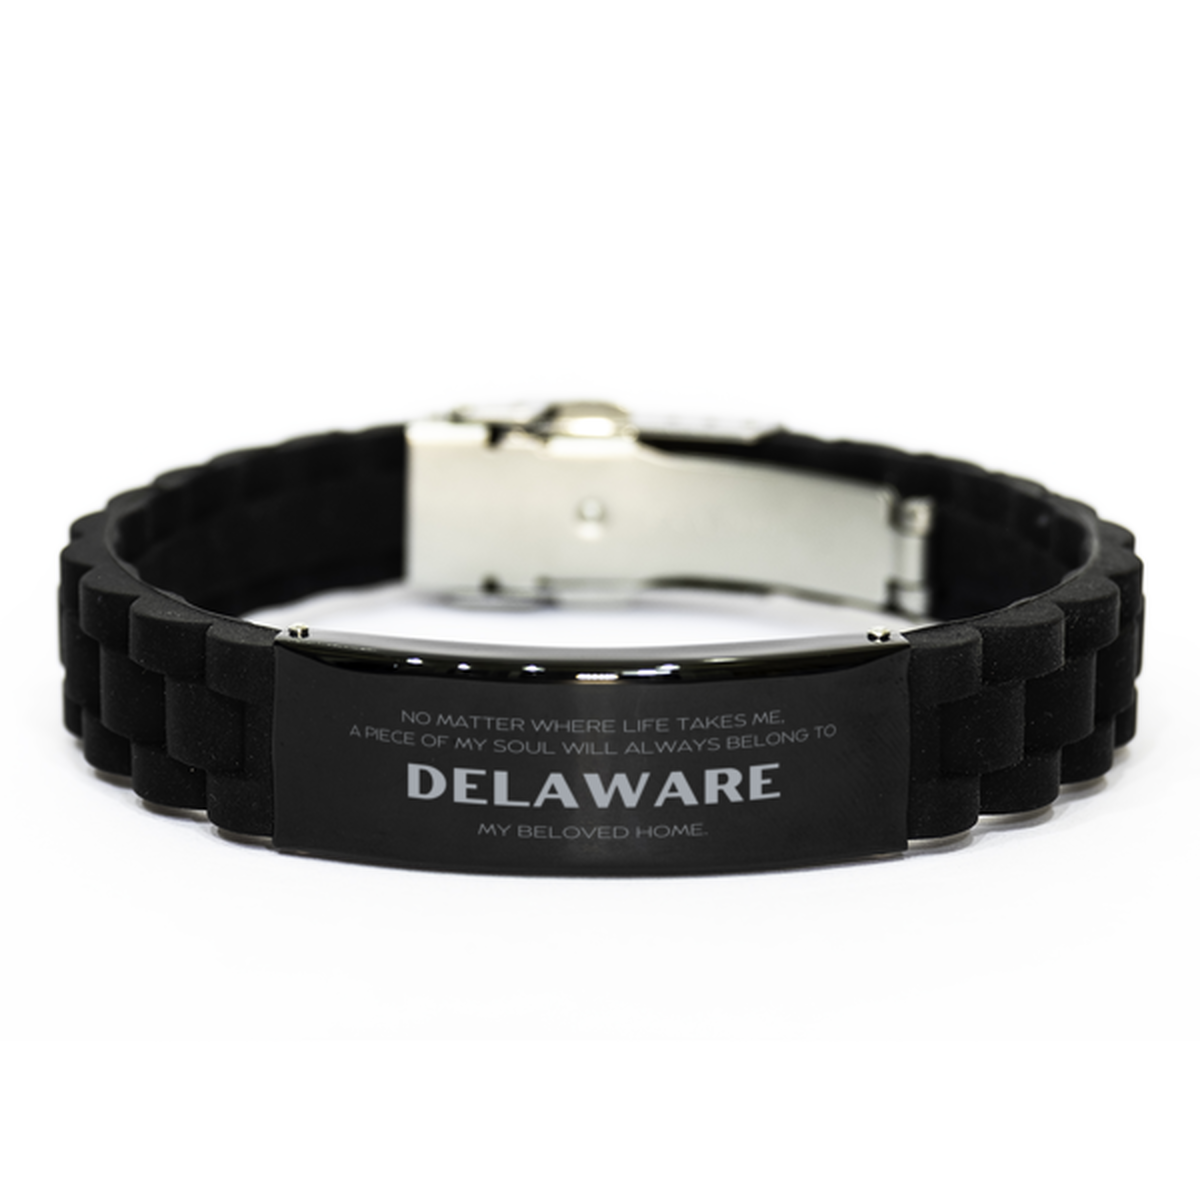 Love Delaware State Gifts, My soul will always belong to Delaware, Proud Black Glidelock Clasp Bracelet, Birthday Unique Gifts For Delaware Men, Women, Friends